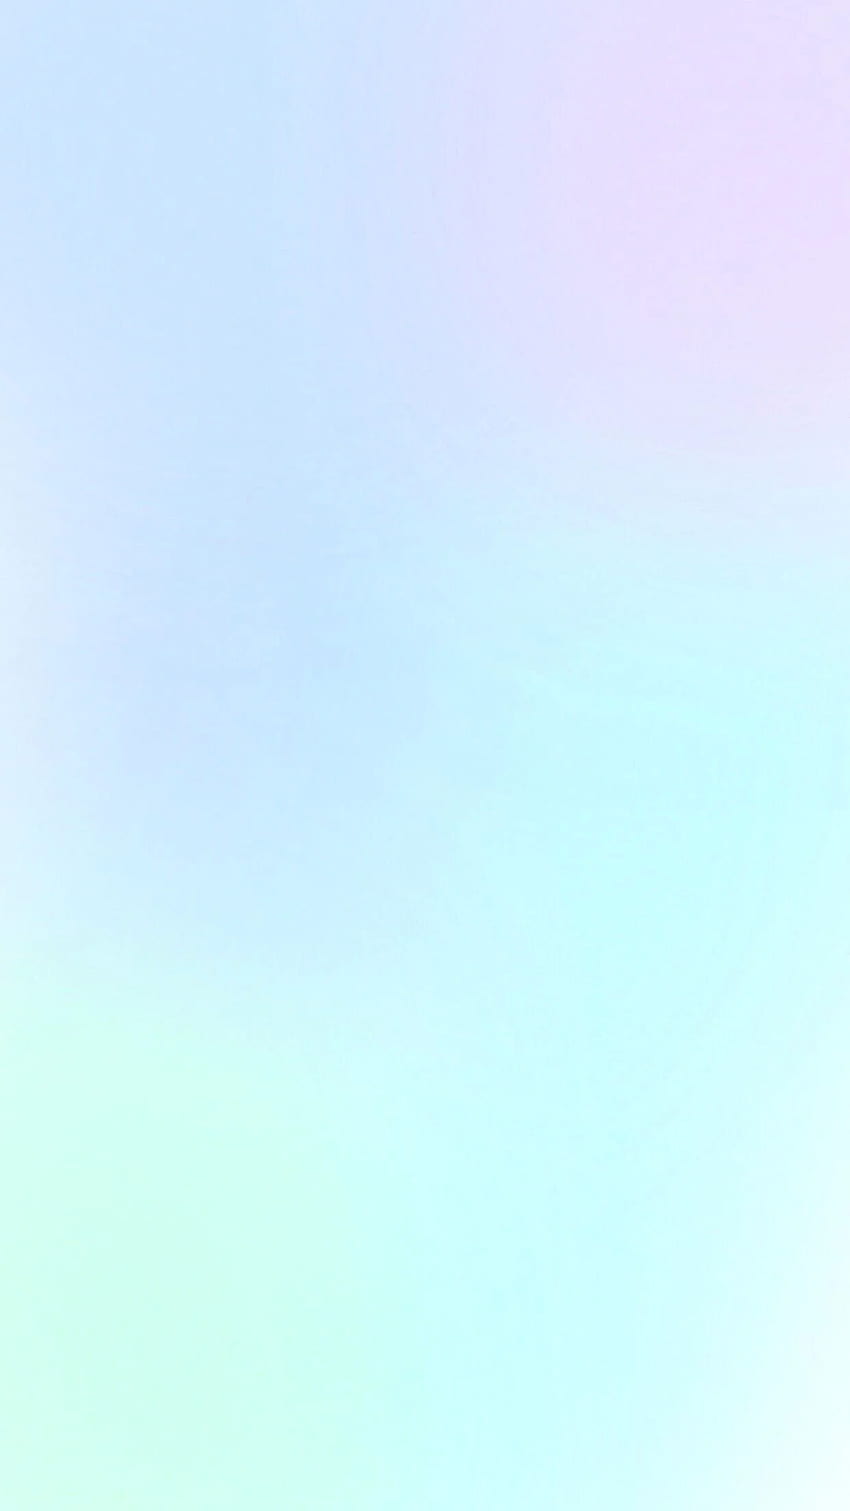 Teléfono azul pastel violeta menta ombre (gradiente). Teléfono, degradado azul pastel fondo de pantalla del teléfono